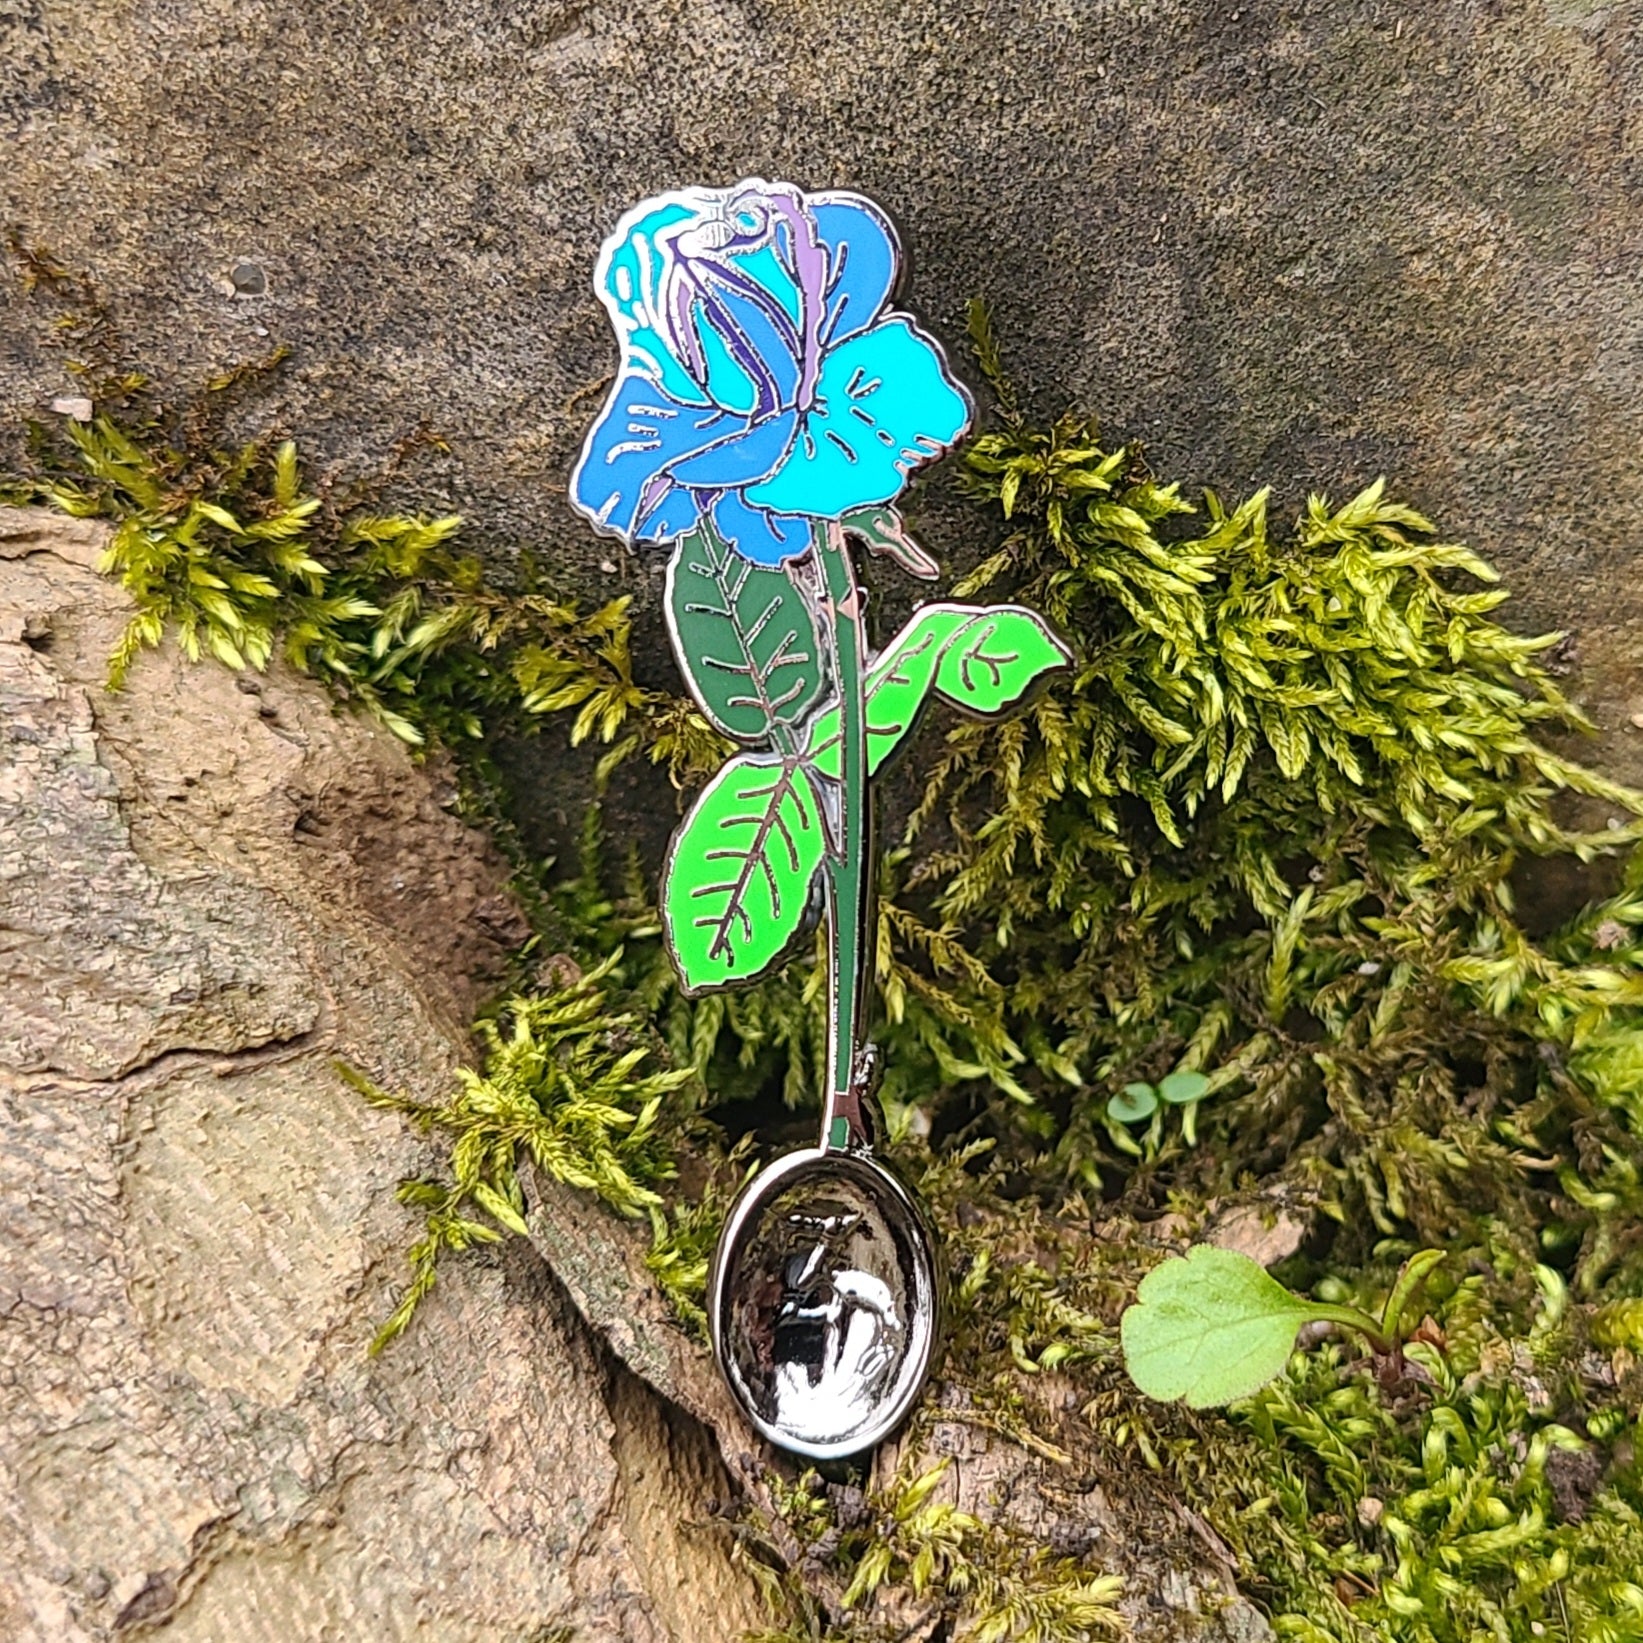 Blooming Rose Zeds Dead Beatz Edm Dubstep Mini Spoon Enamel Pins Hat Pins Lapel Pin Brooch Badge Festival Pin